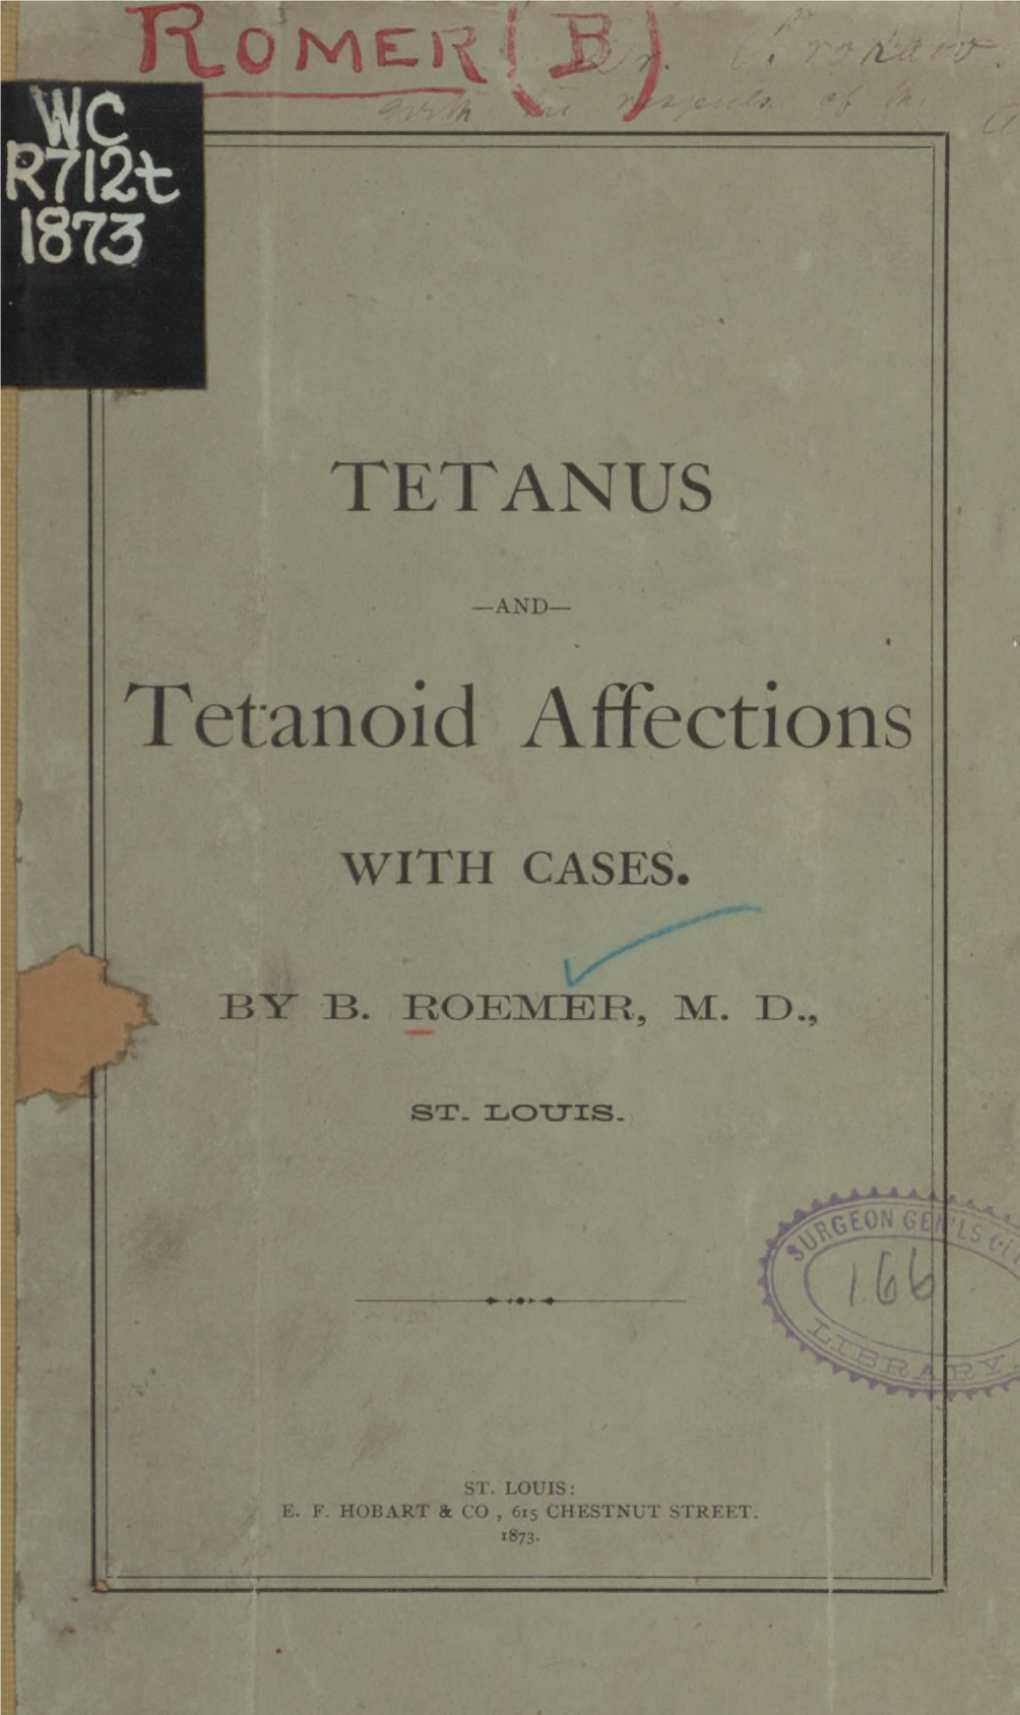 On Tetanus and Tetanoid Affections